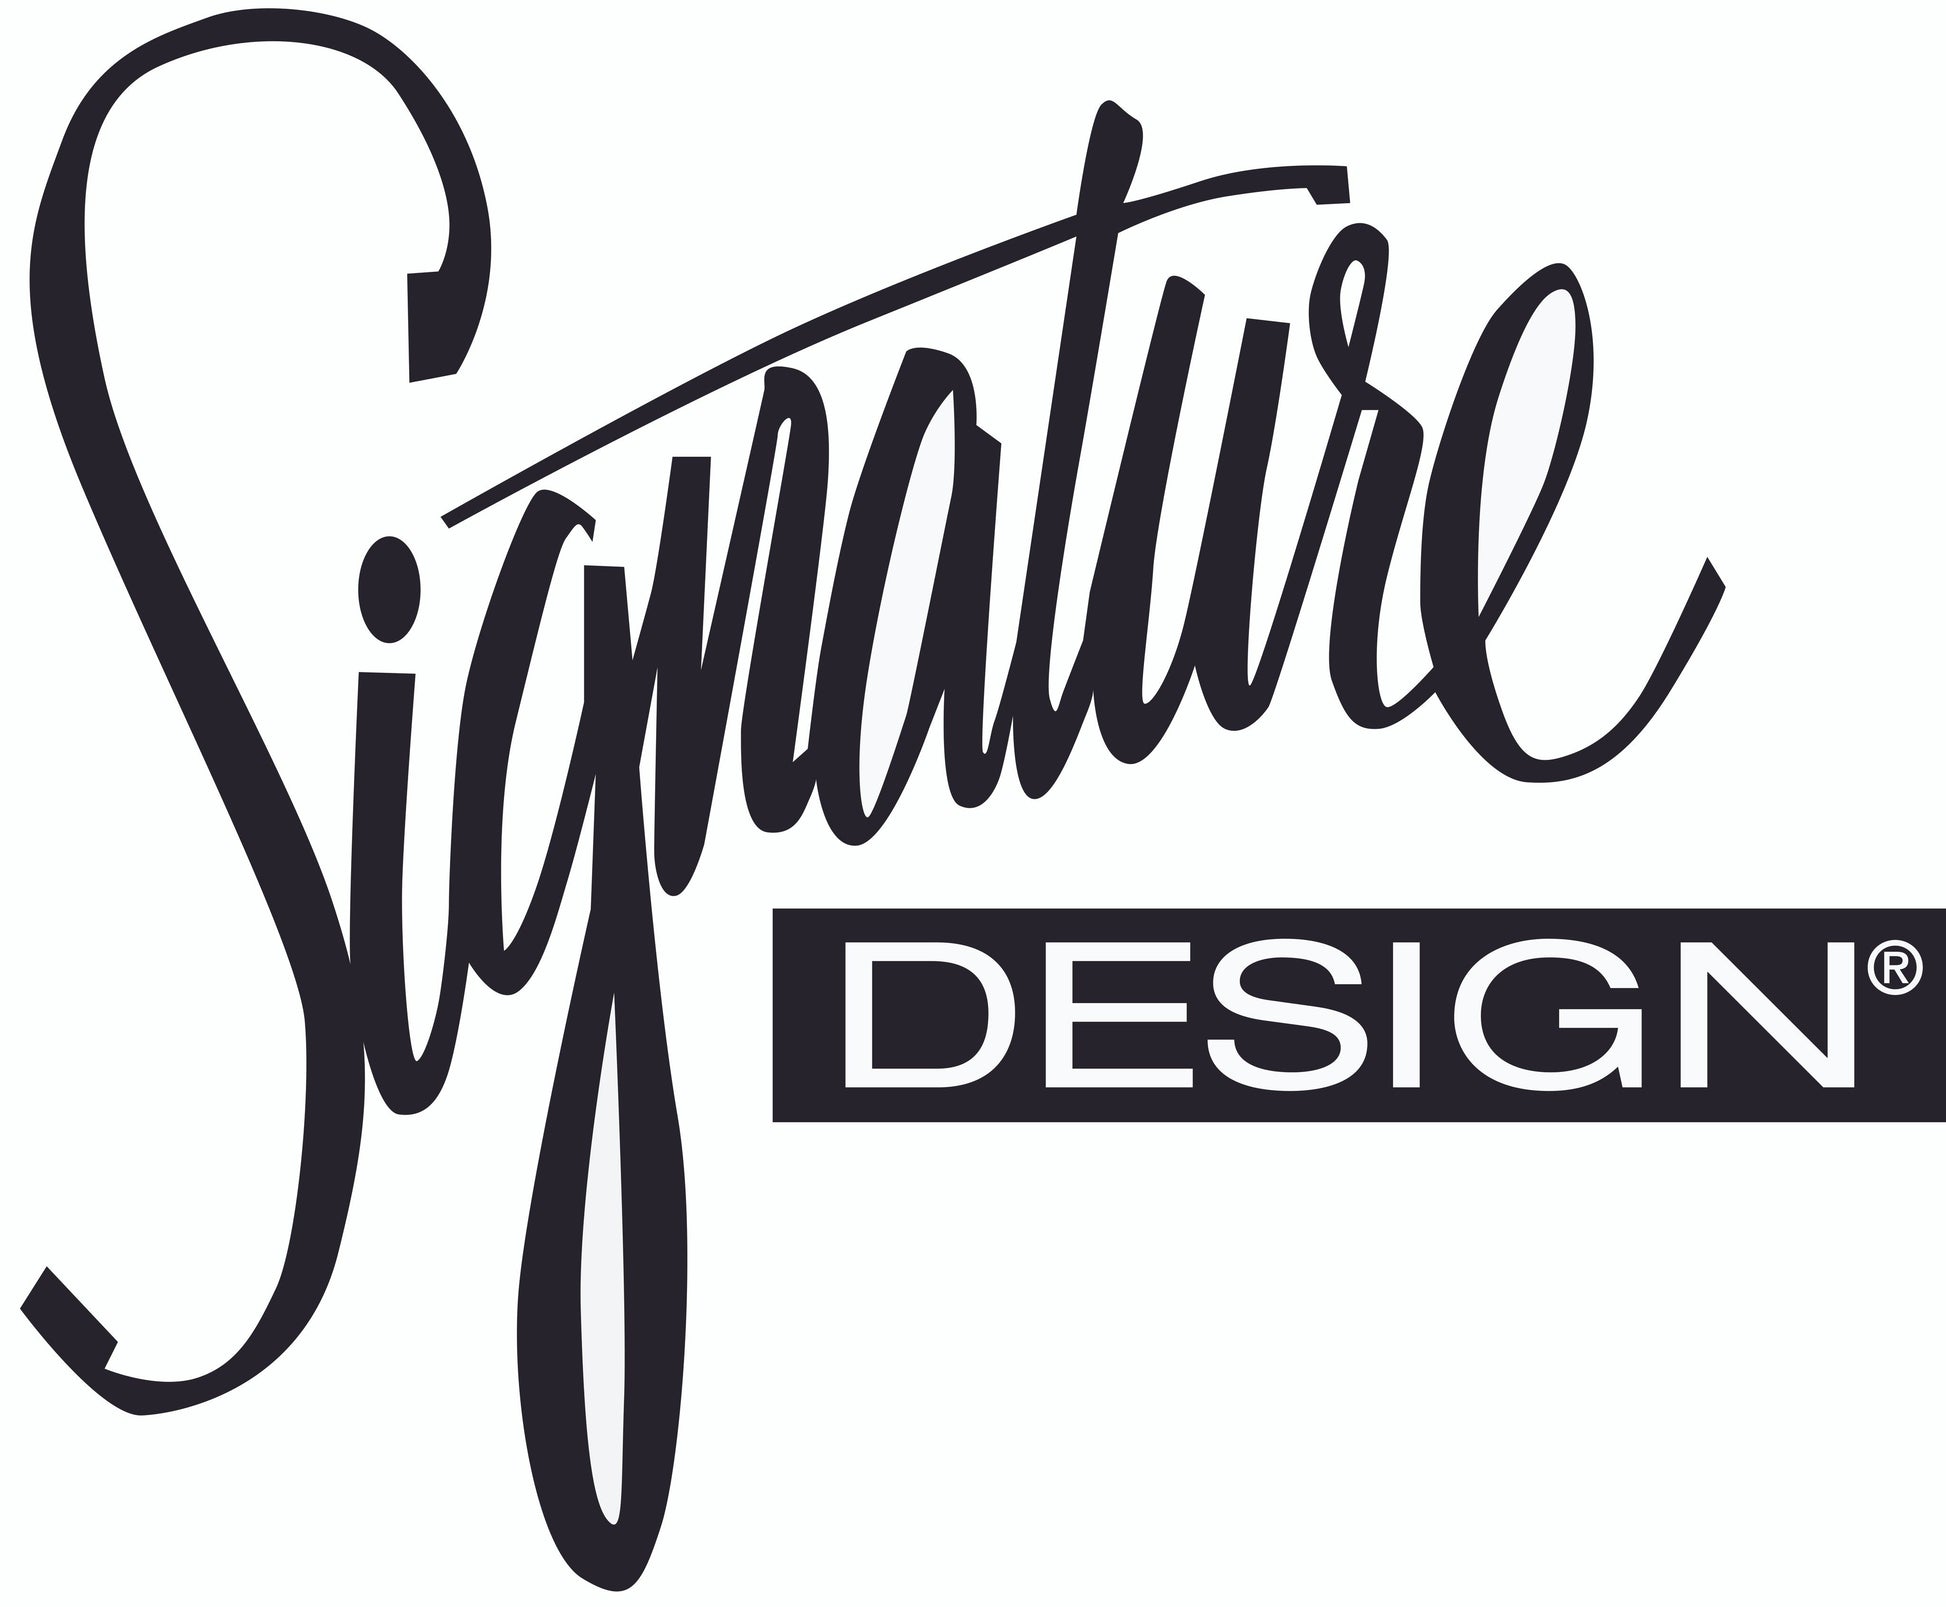 Mancin REC Sofa w/Drop Down Table Signature Design by Ashley®